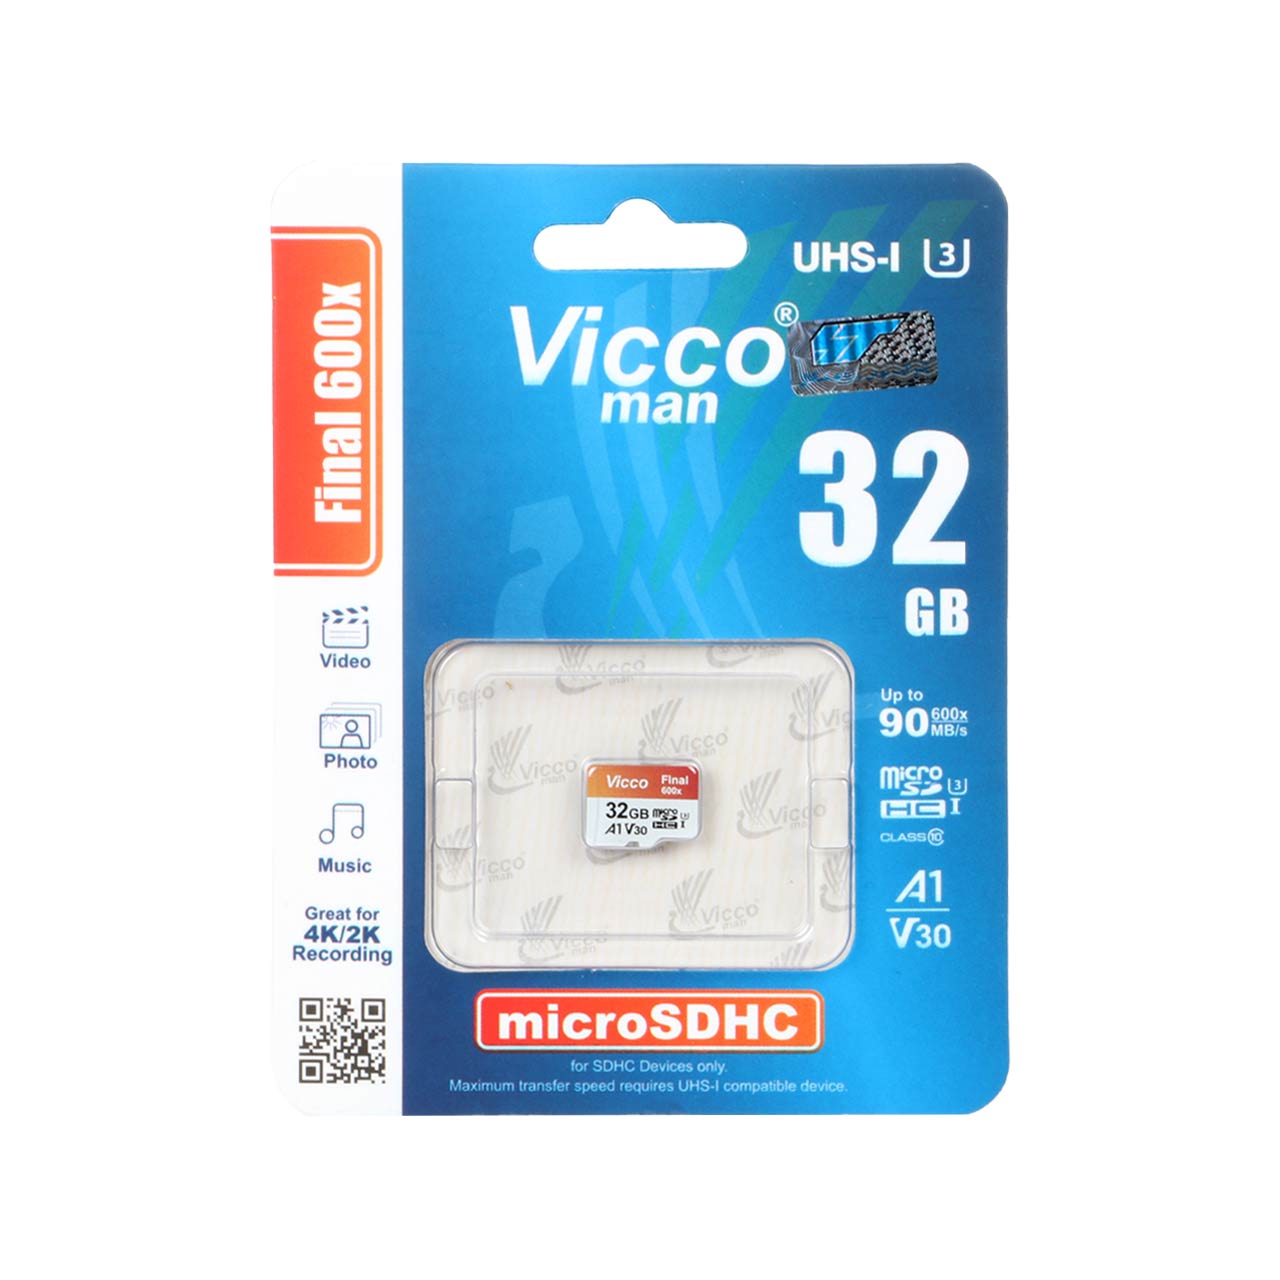 Vicco man Final 600X microSDHC UHS-I U3 Class10-90MB/s - 3